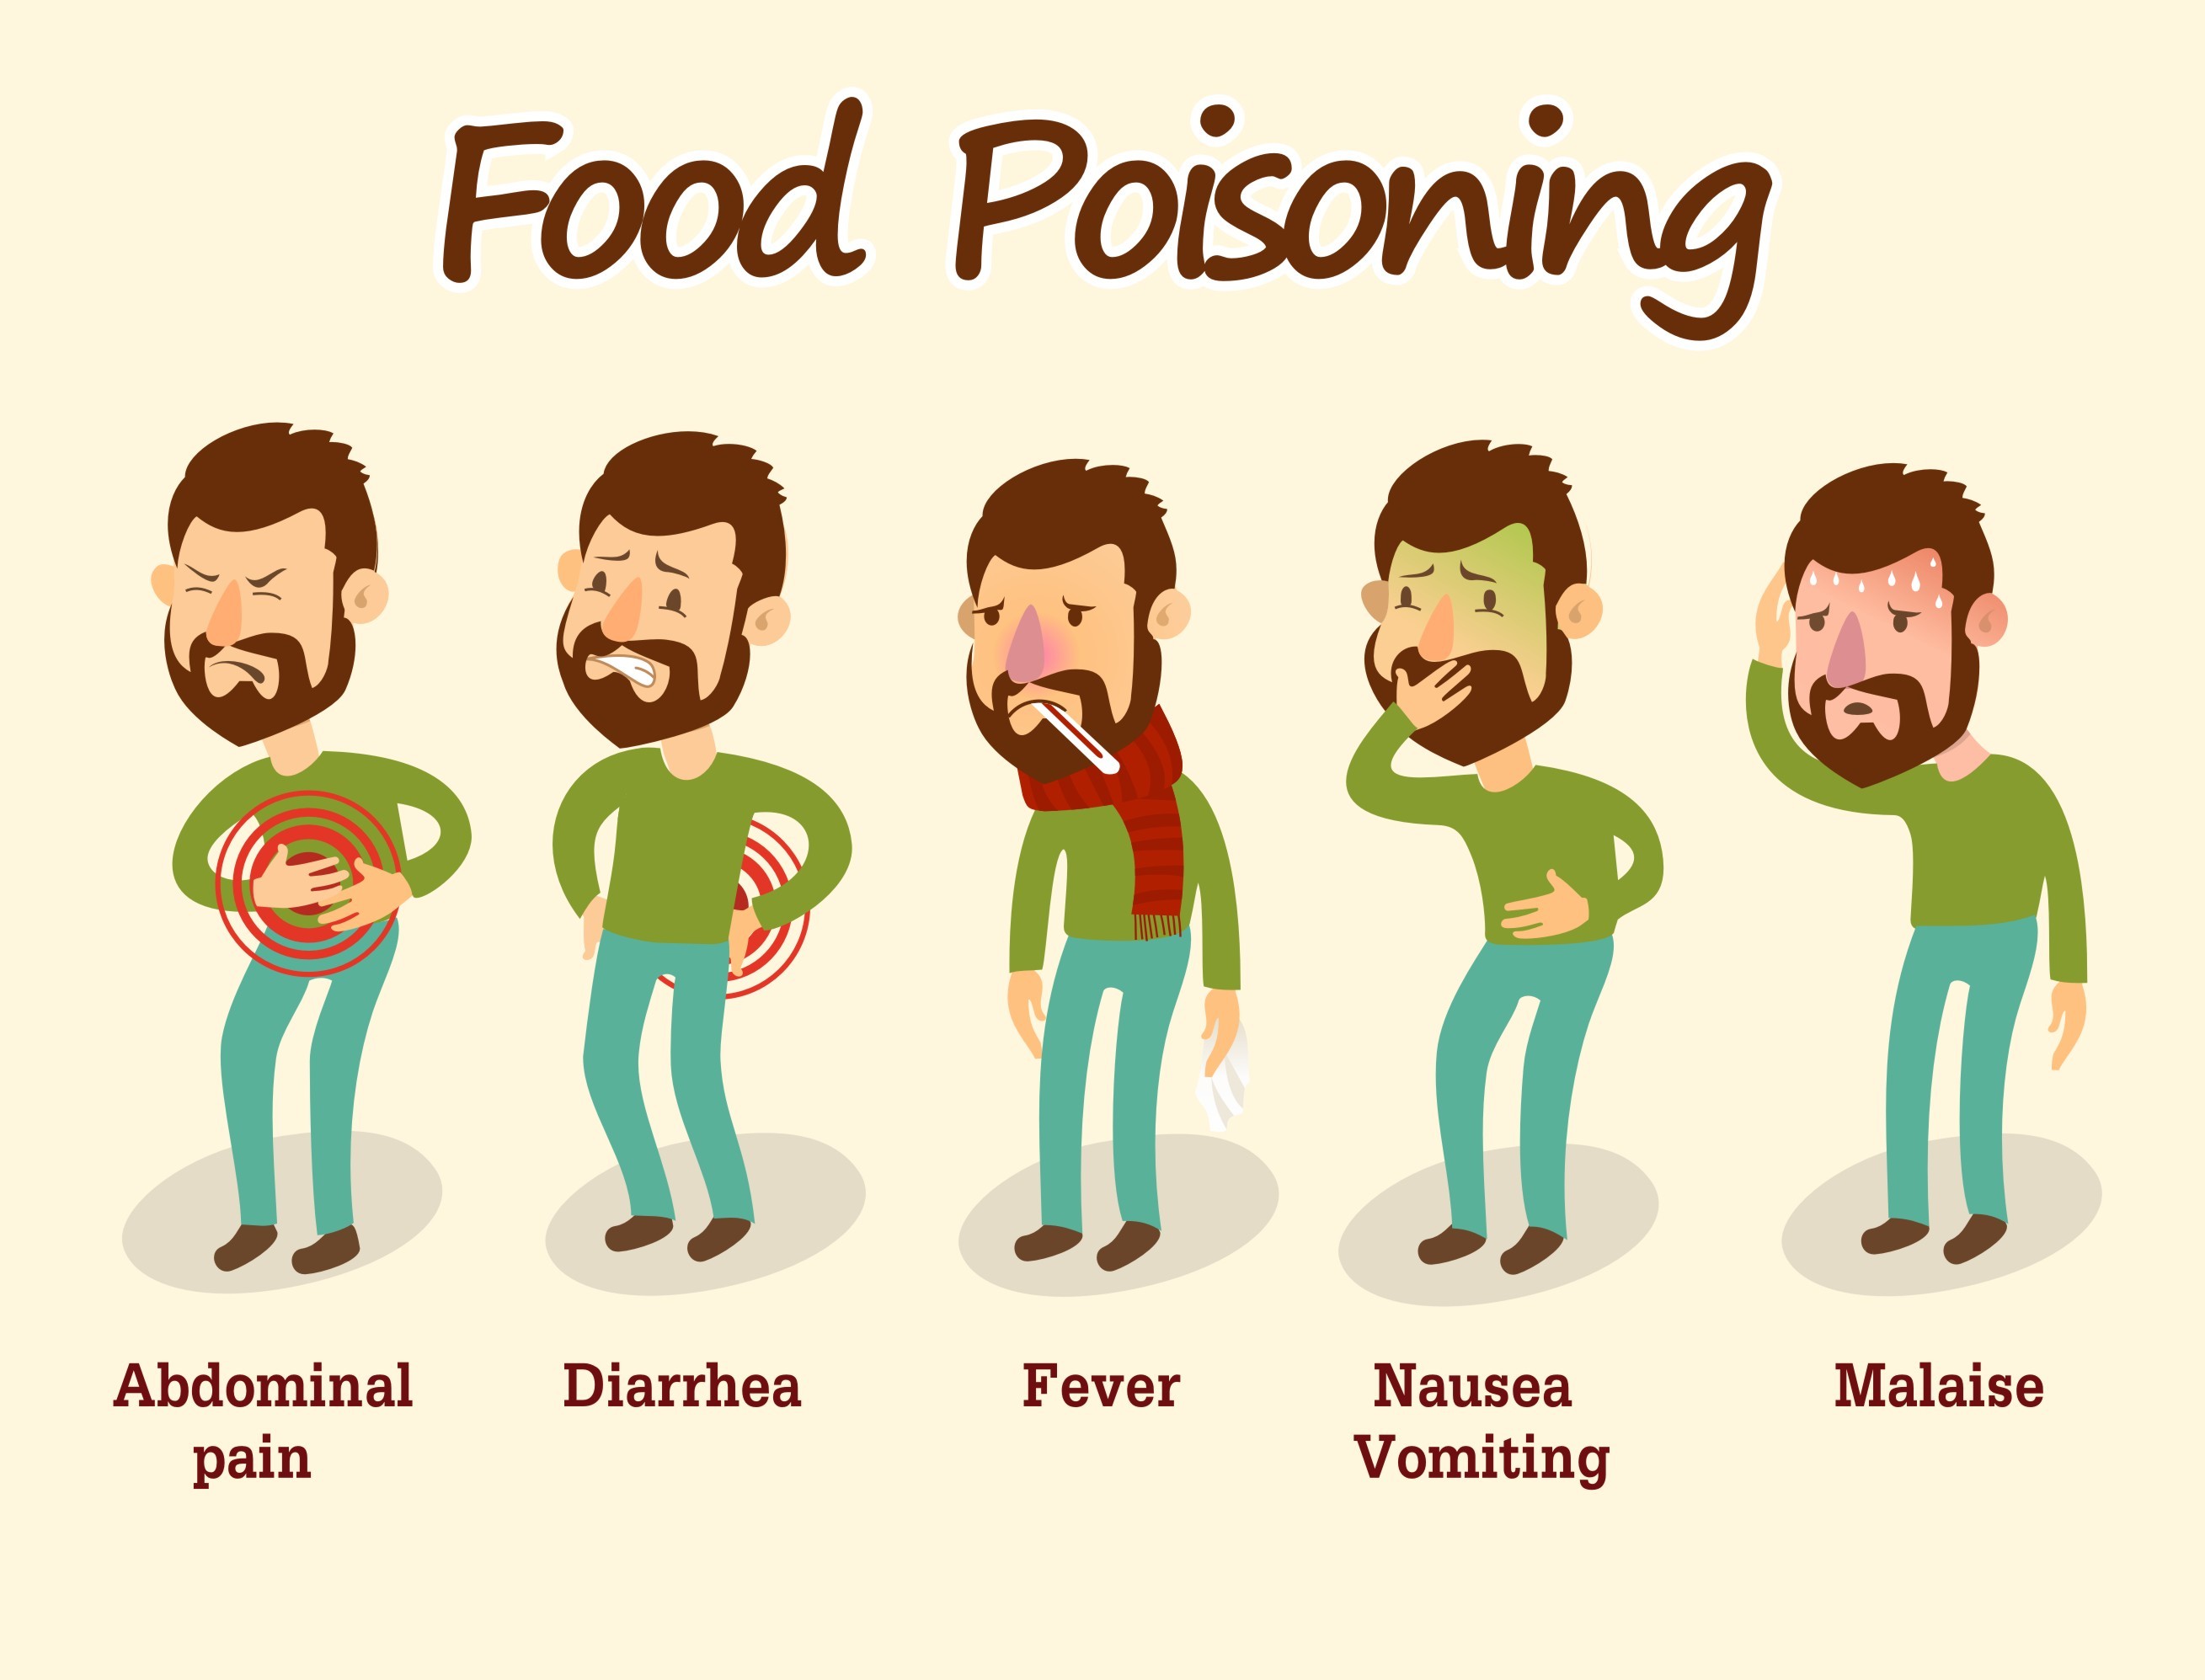 food poisoning essay upsr